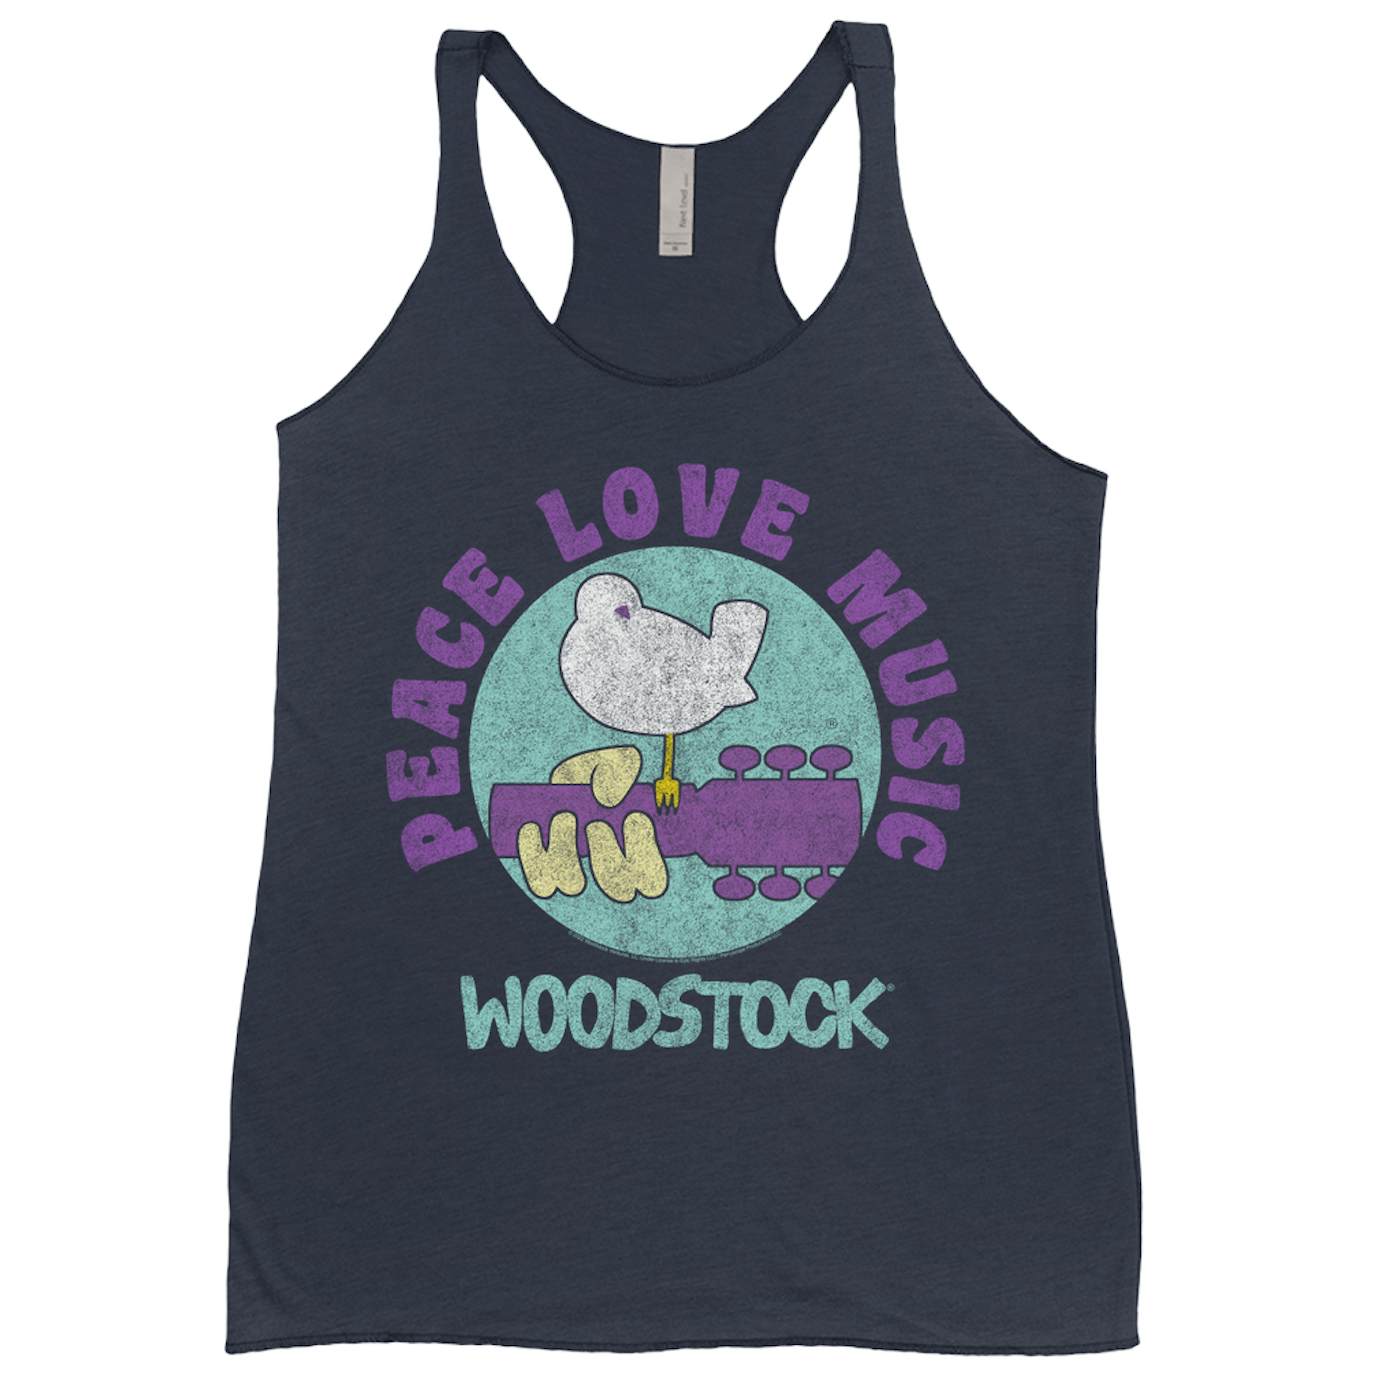 Woodstock Ladies' Tank Top | Peace Love Music Bird And Guitar Design Woodstock Shirt